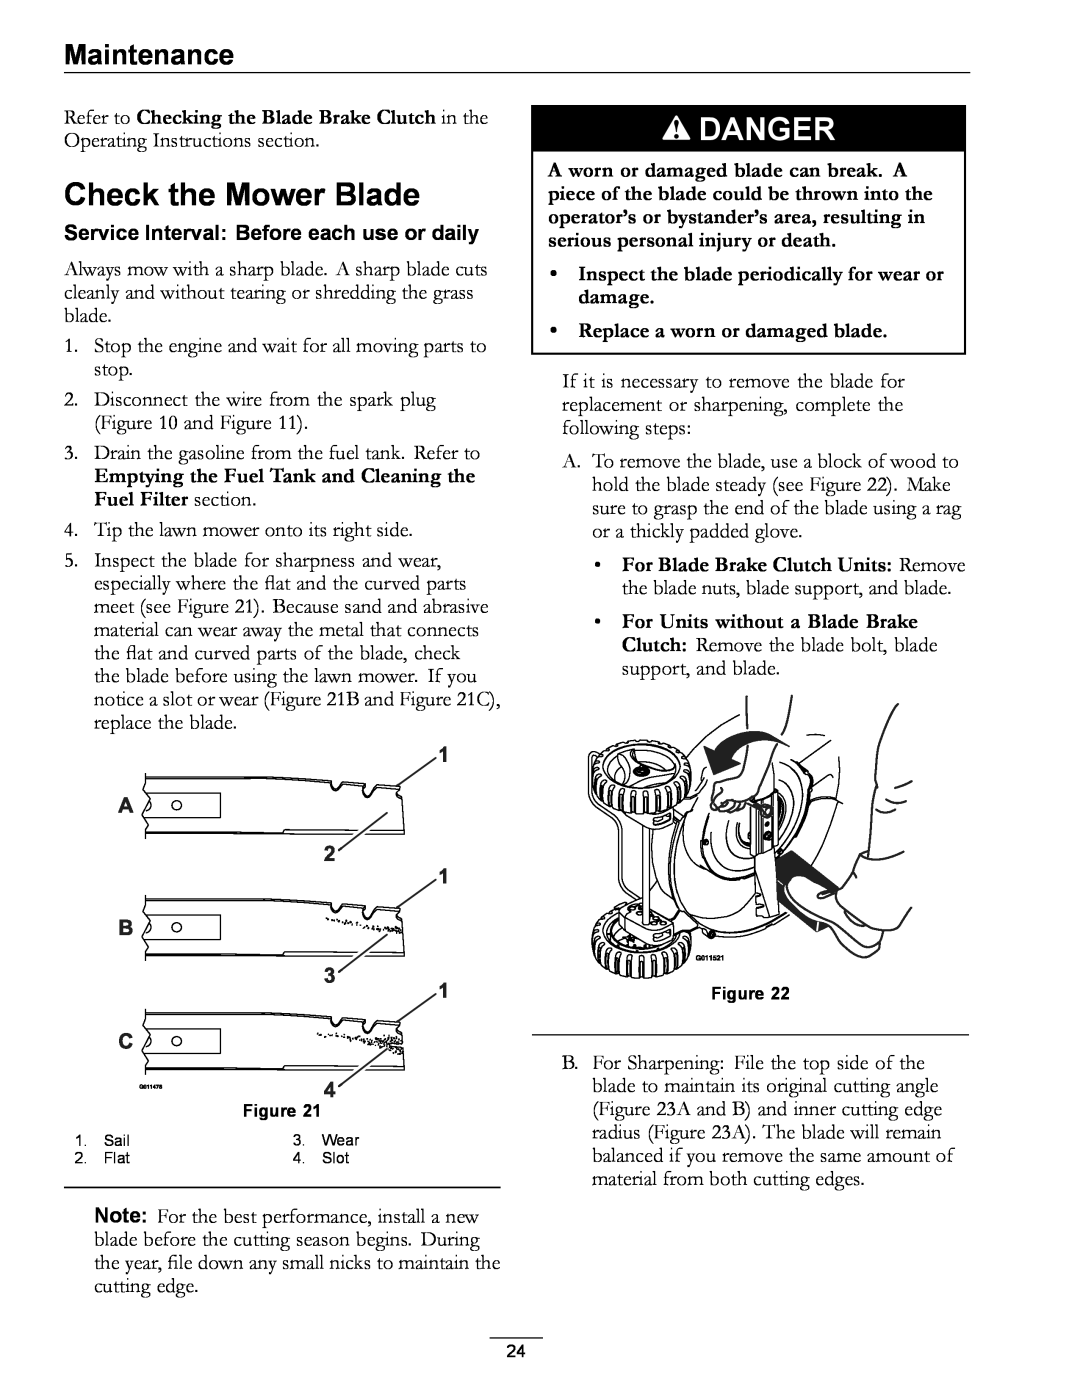 Exmark 000 & higher, 850 manual Check the Mower Blade, Danger, Maintenance 